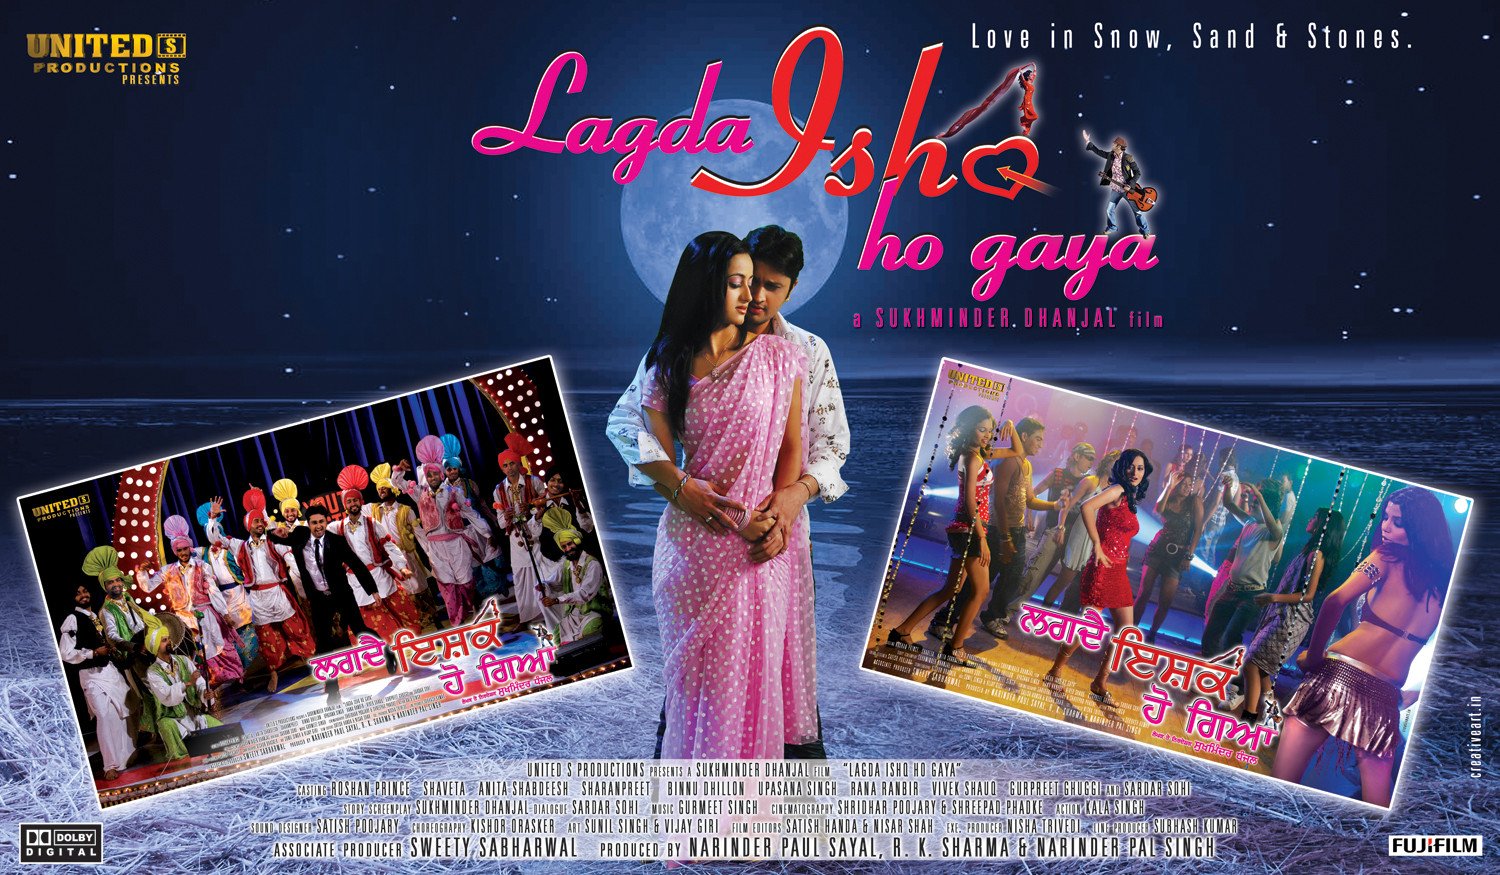 Extra Large Movie Poster Image for Lagda Ishq Ho Gaya (#8 of 11)